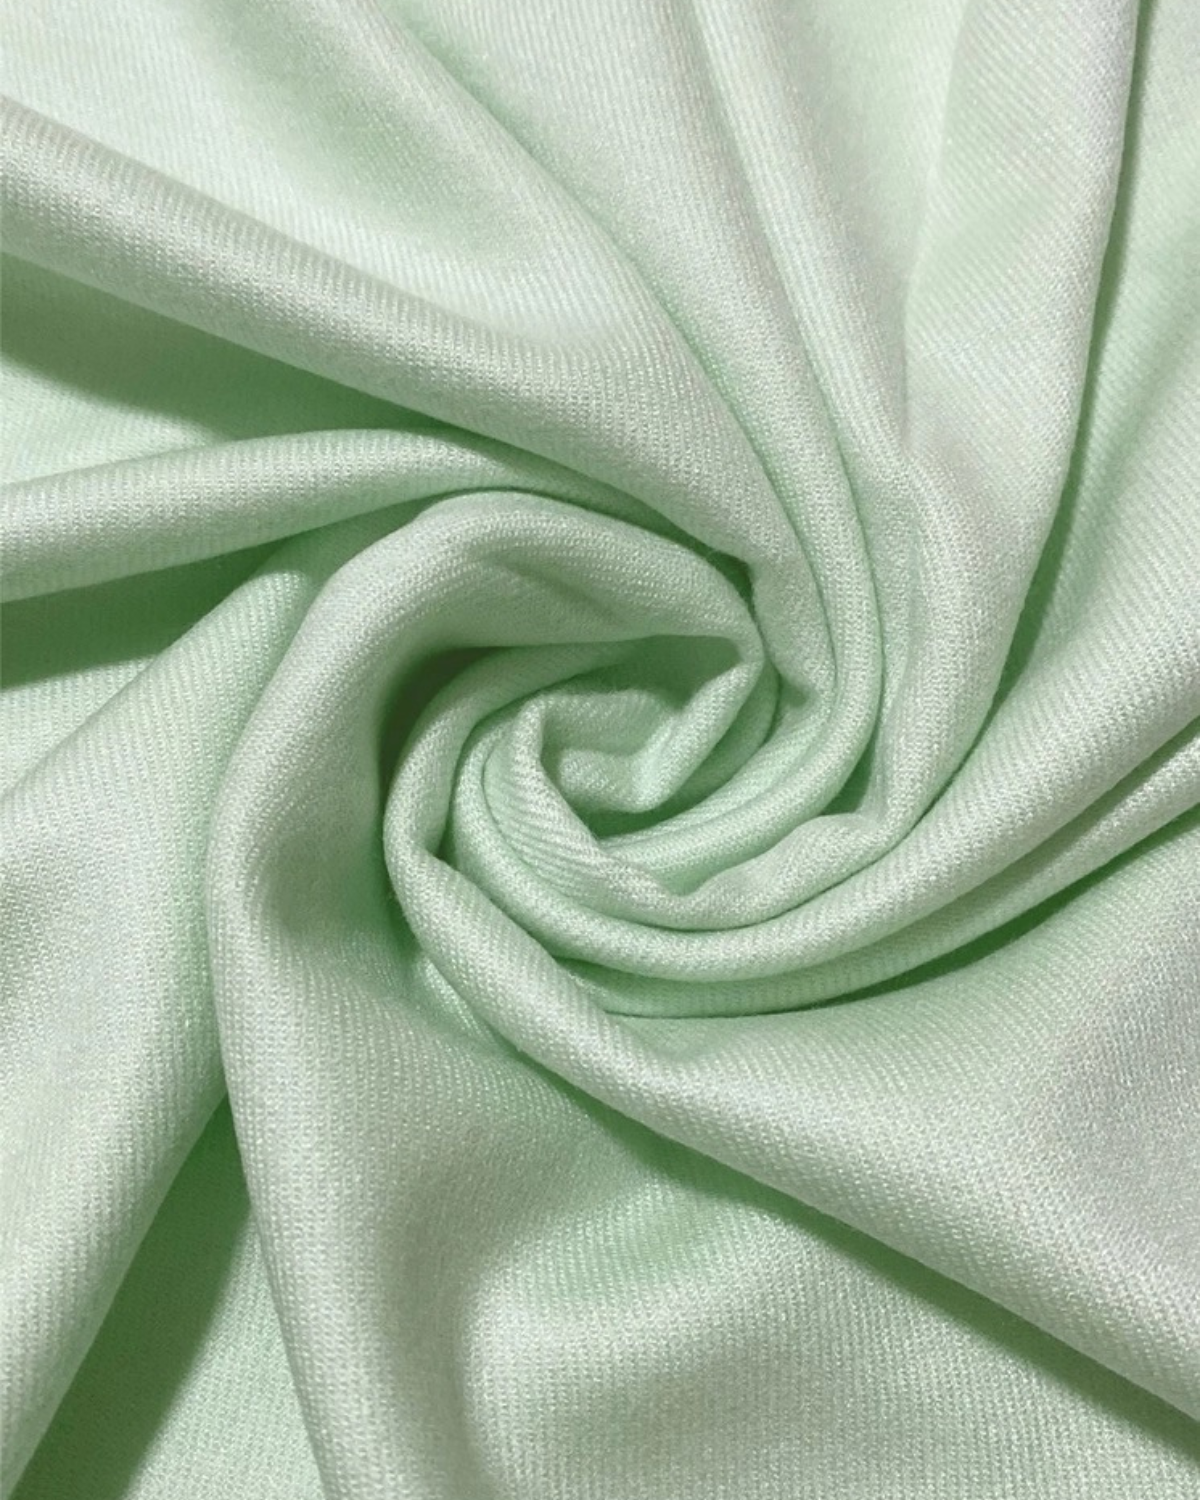 Super Soft Plain Pashmina Tassel Scarf - Mint Green